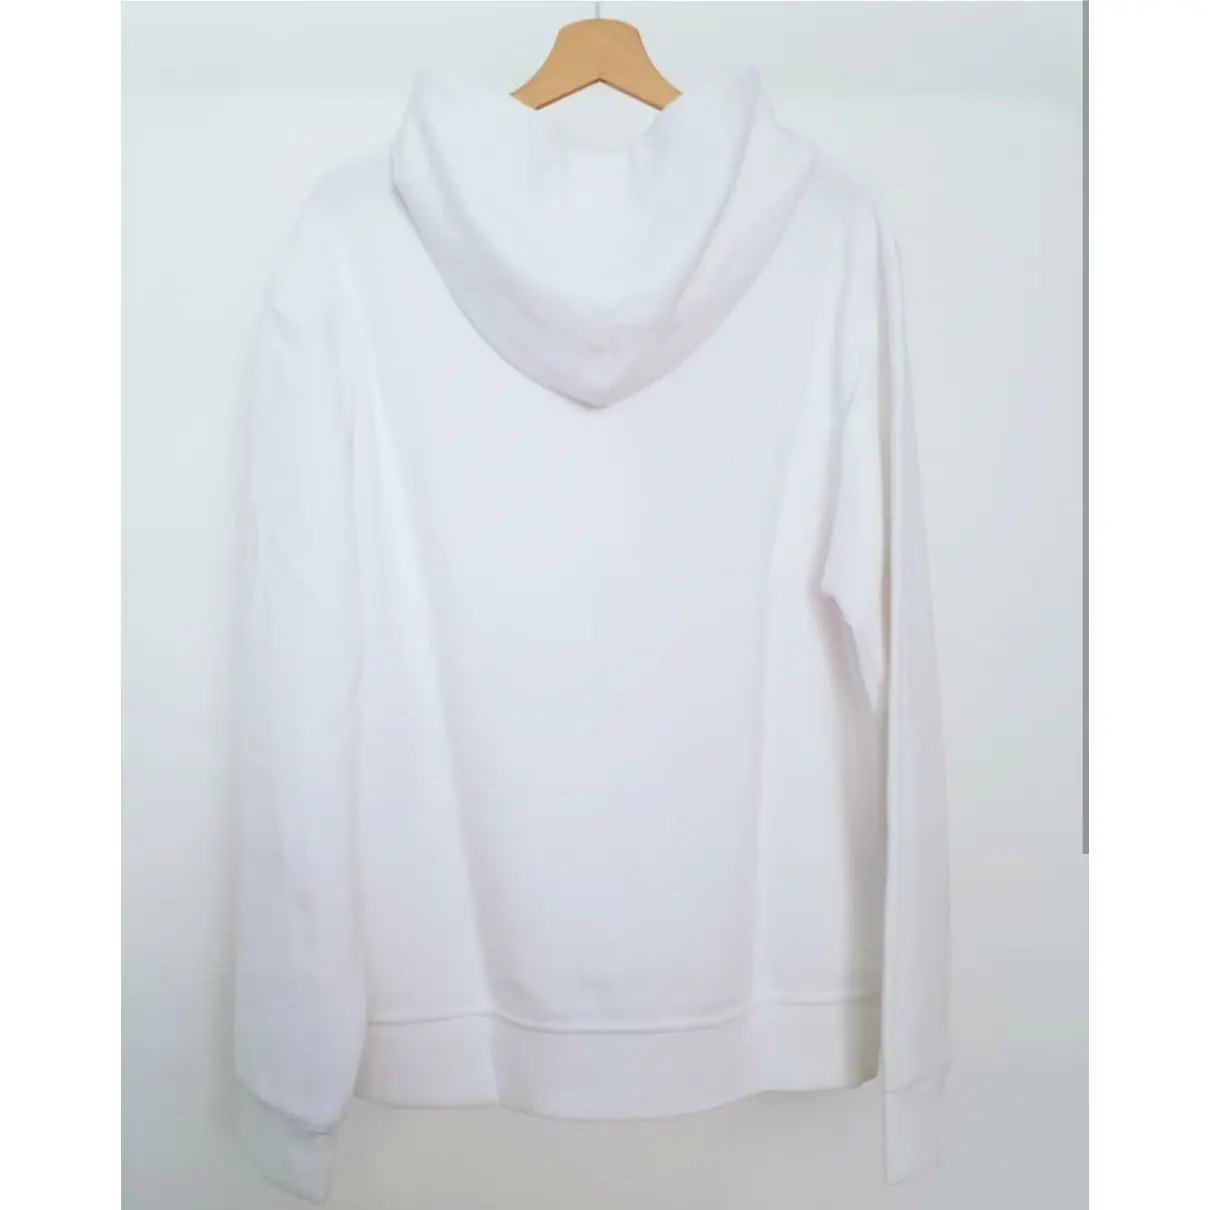 Buy Polo Ralph Lauren White Cotton Knitwear & Sweatshirt online